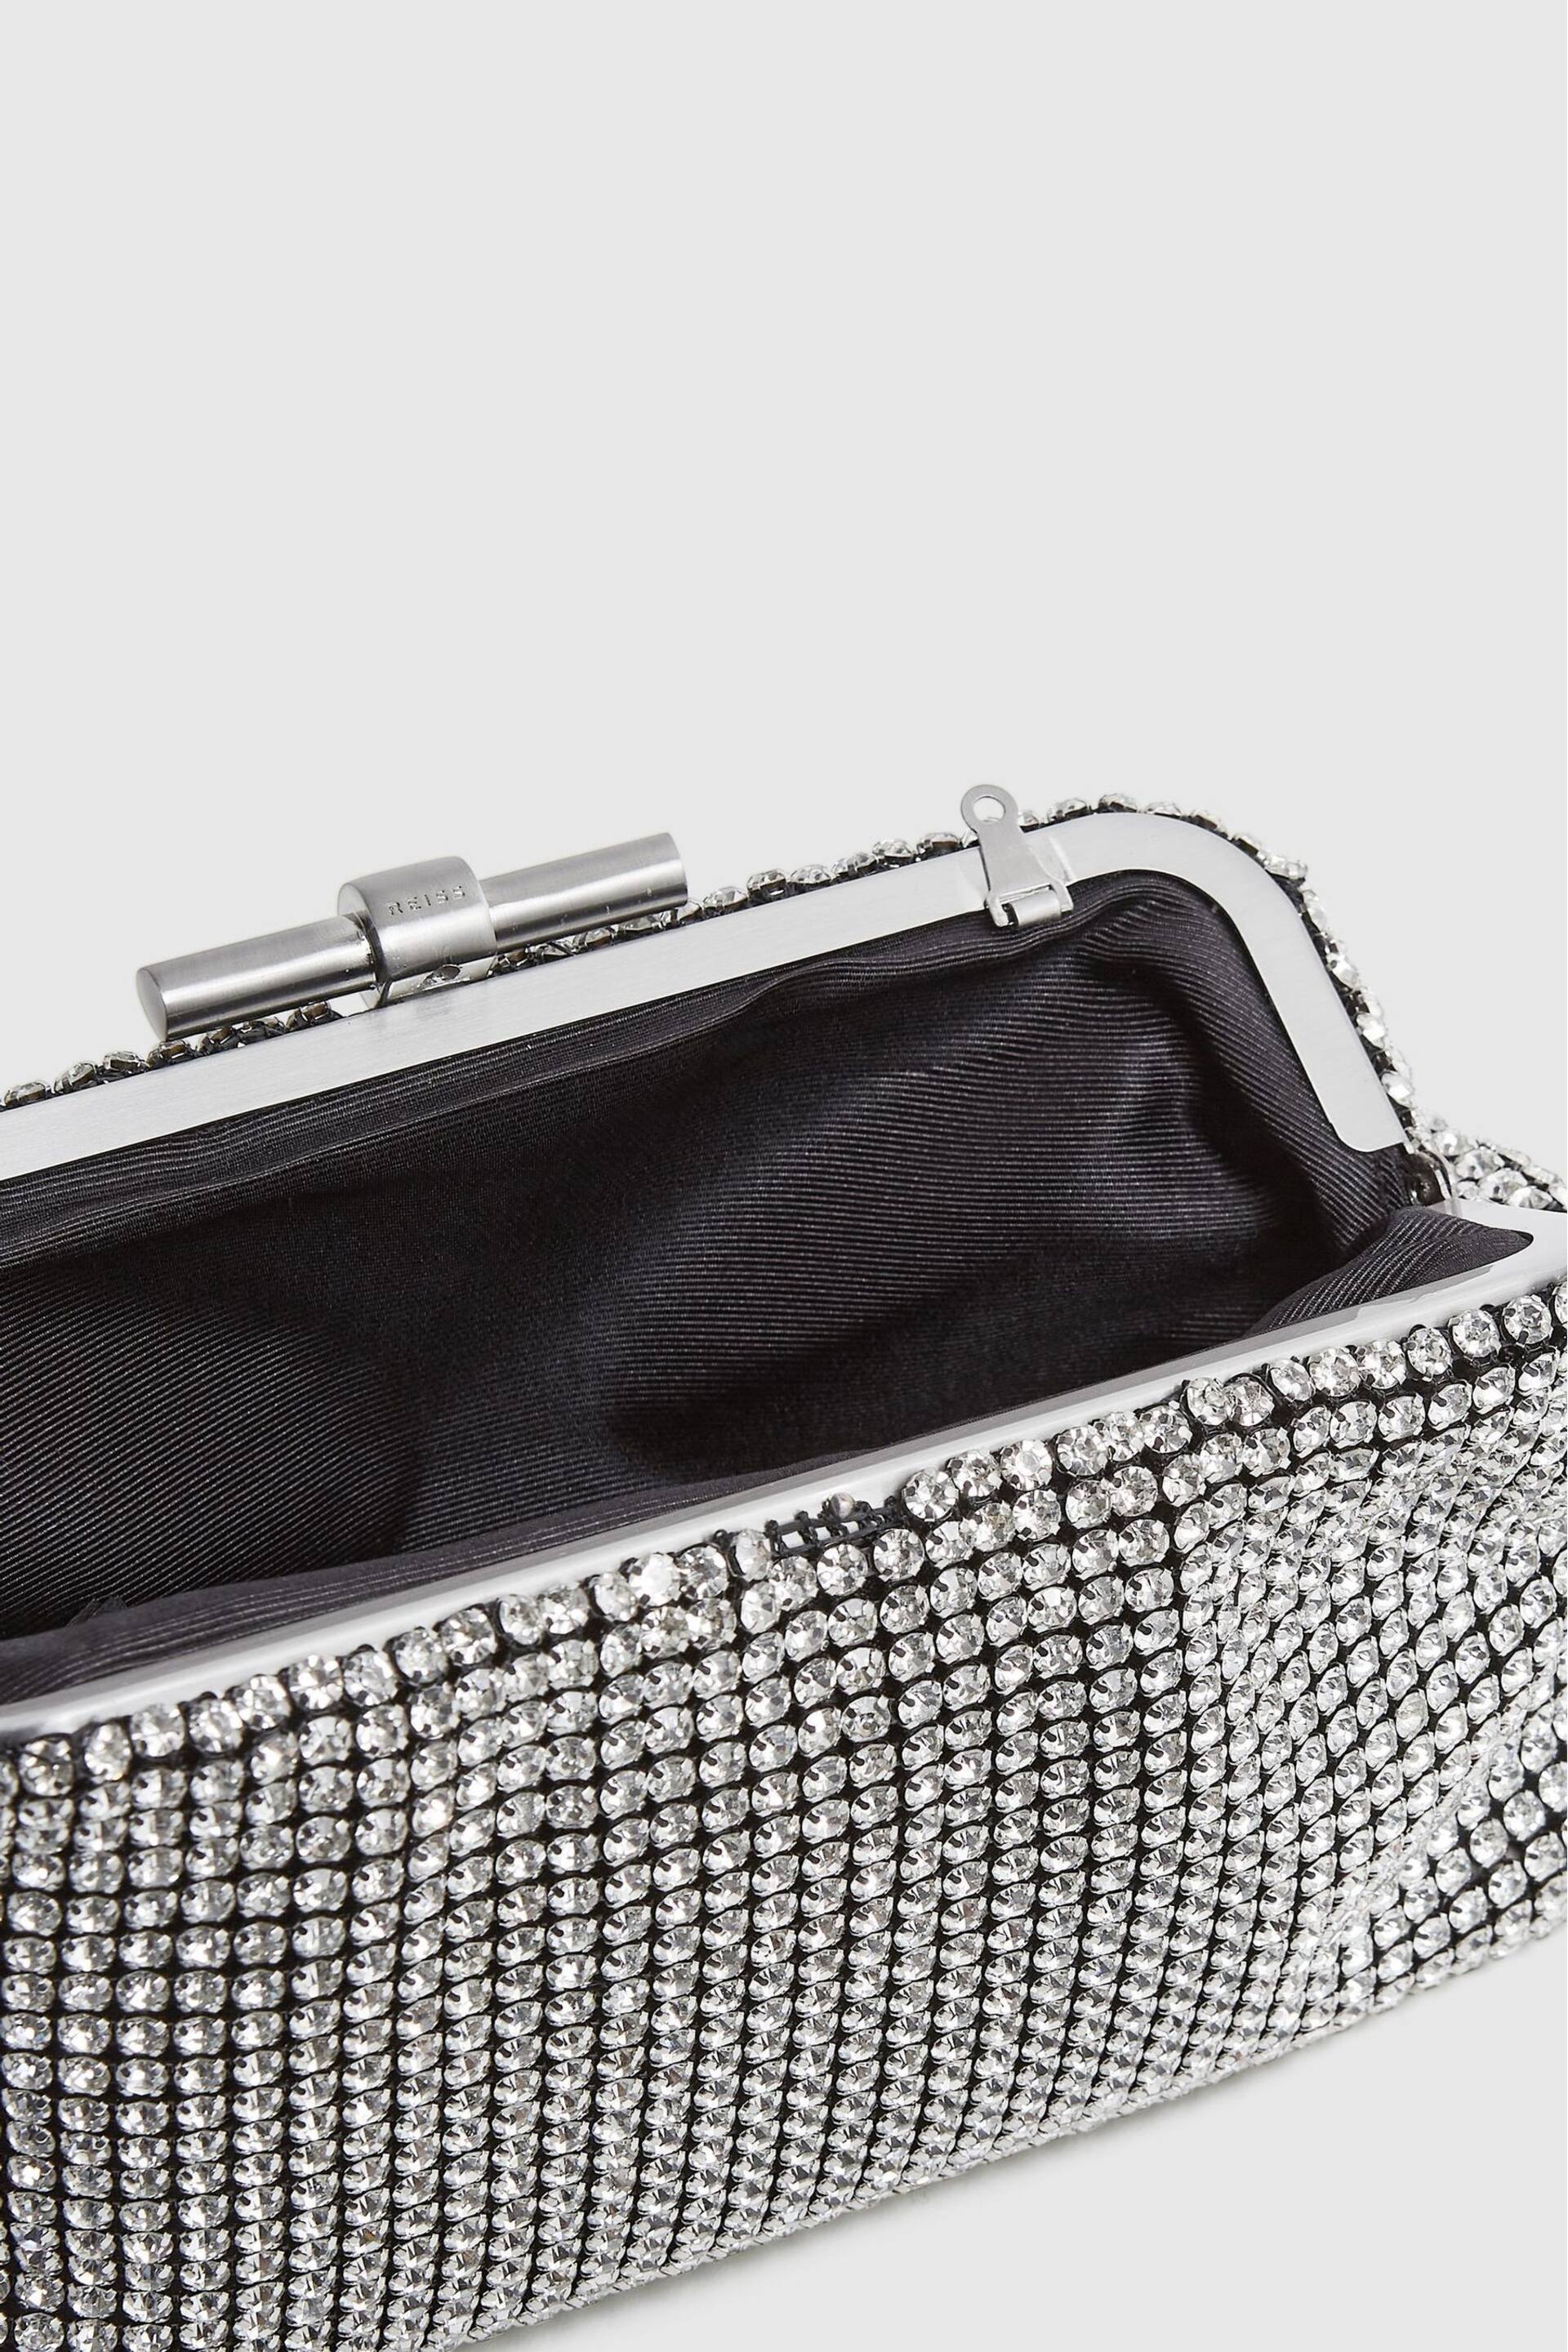 Reiss Silver Adaline Embellished Clutch Bag - Image 4 of 6